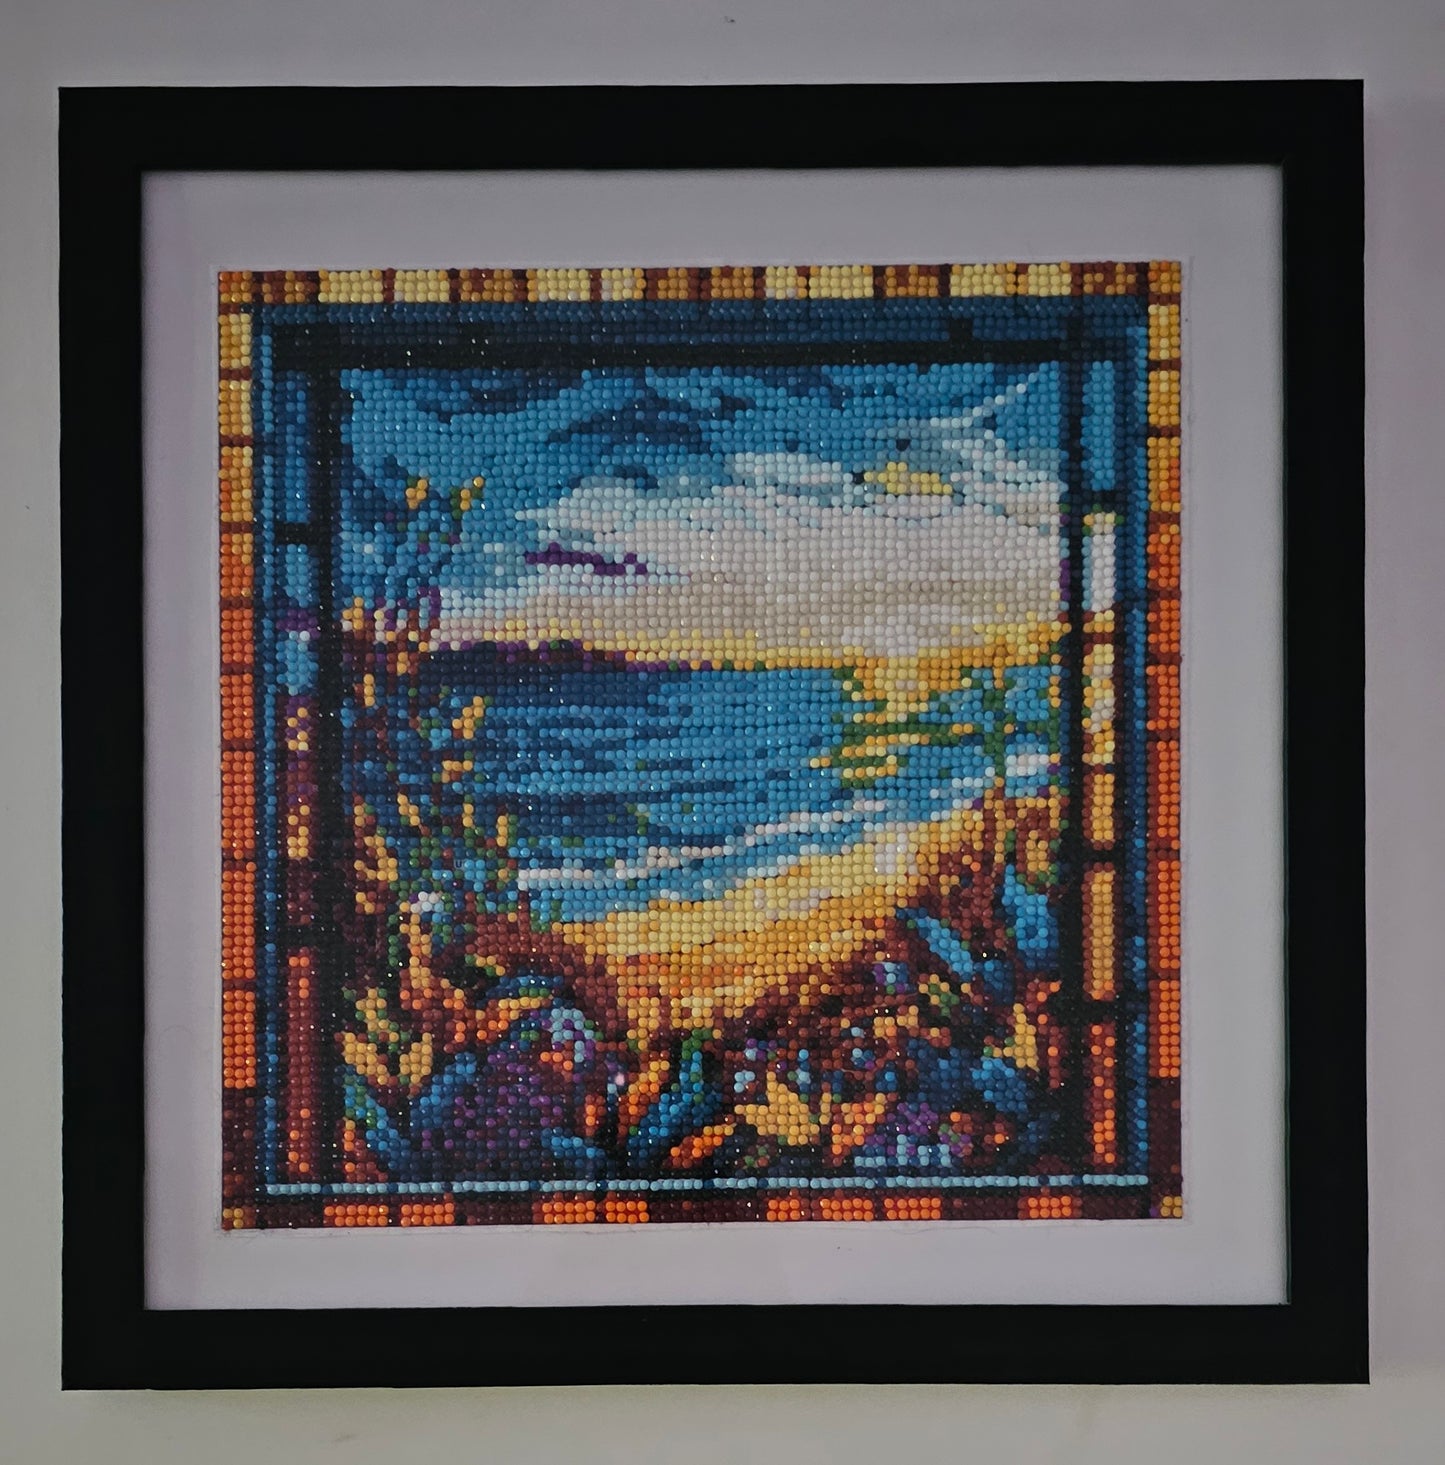 Groovy baby framed artwork - Coastal mosaic